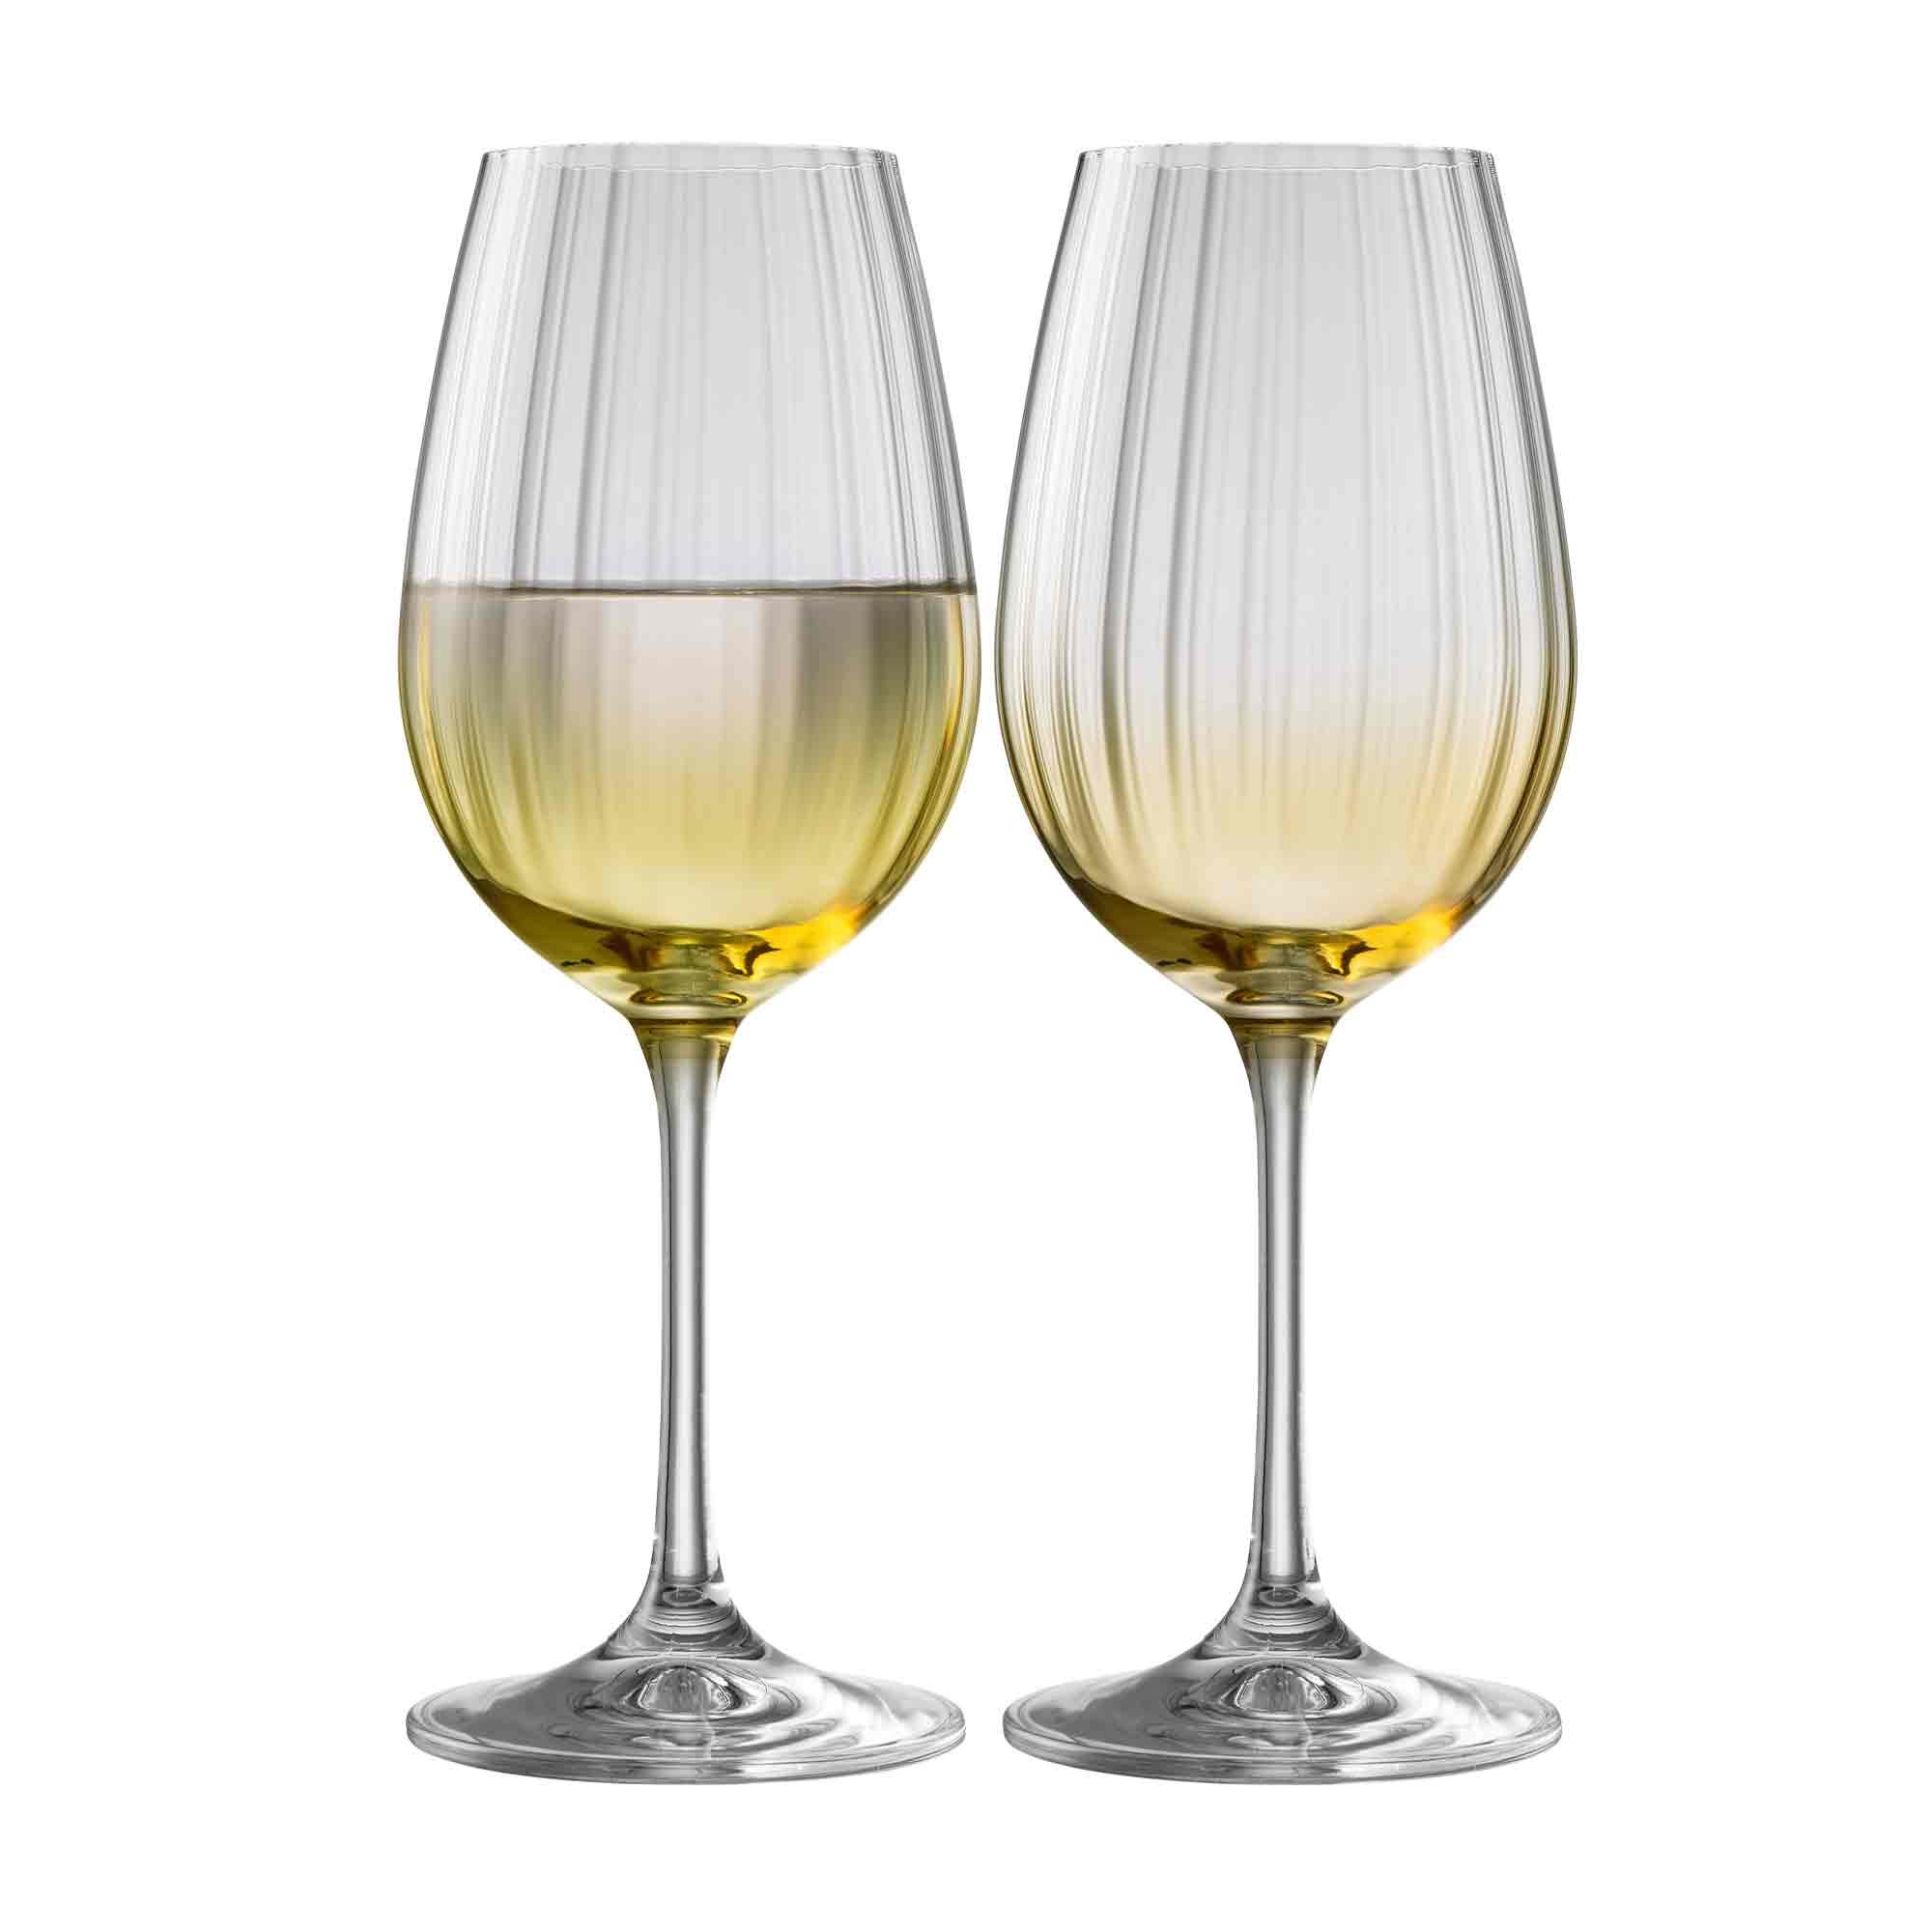 Galway Crystal Erne Wine Glasses (Set of 4